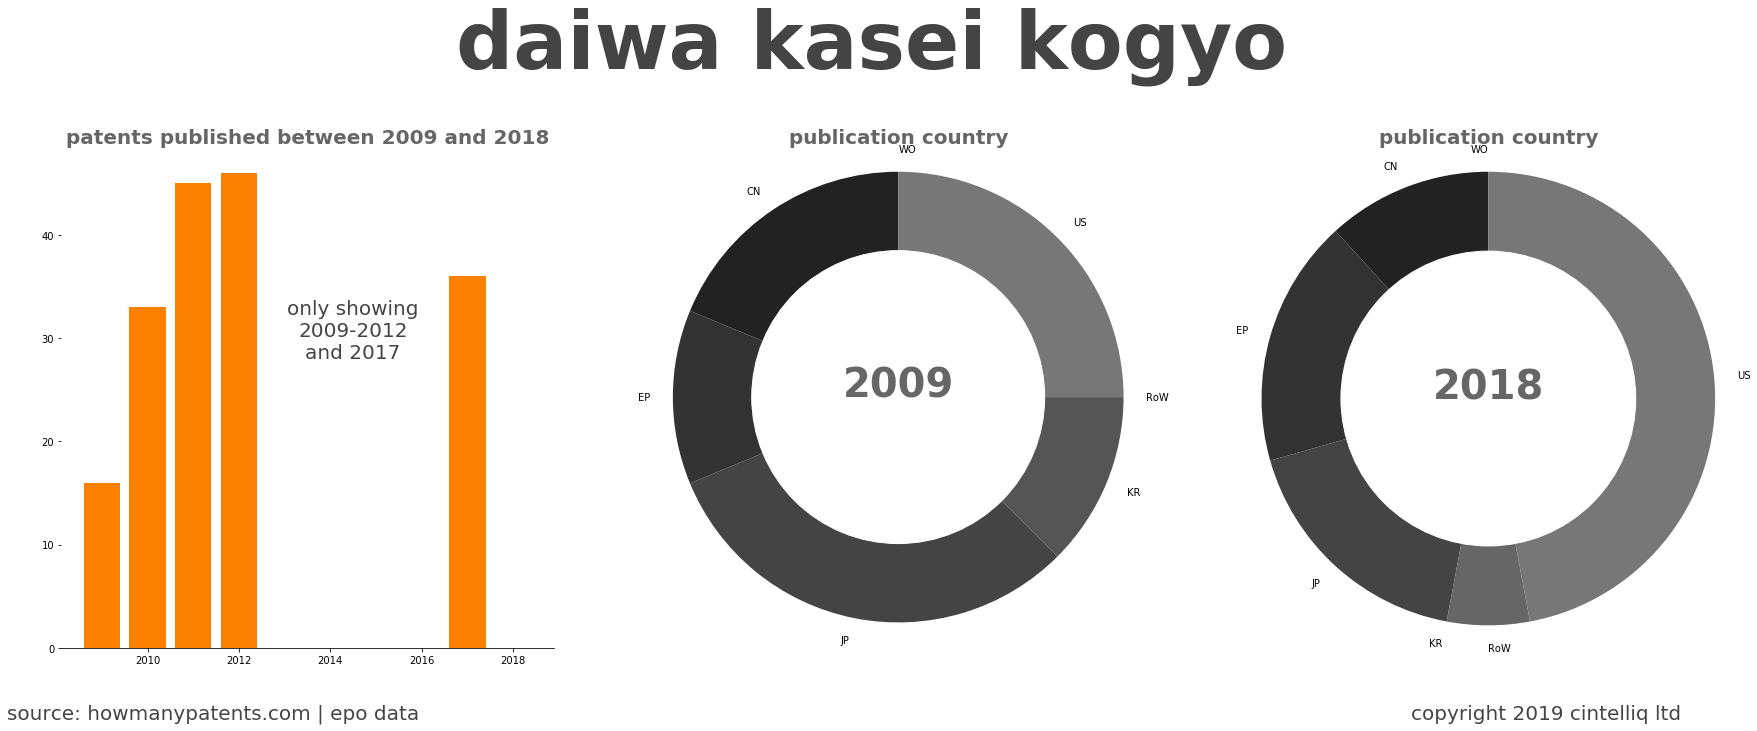 summary of patents for Daiwa Kasei Kogyo